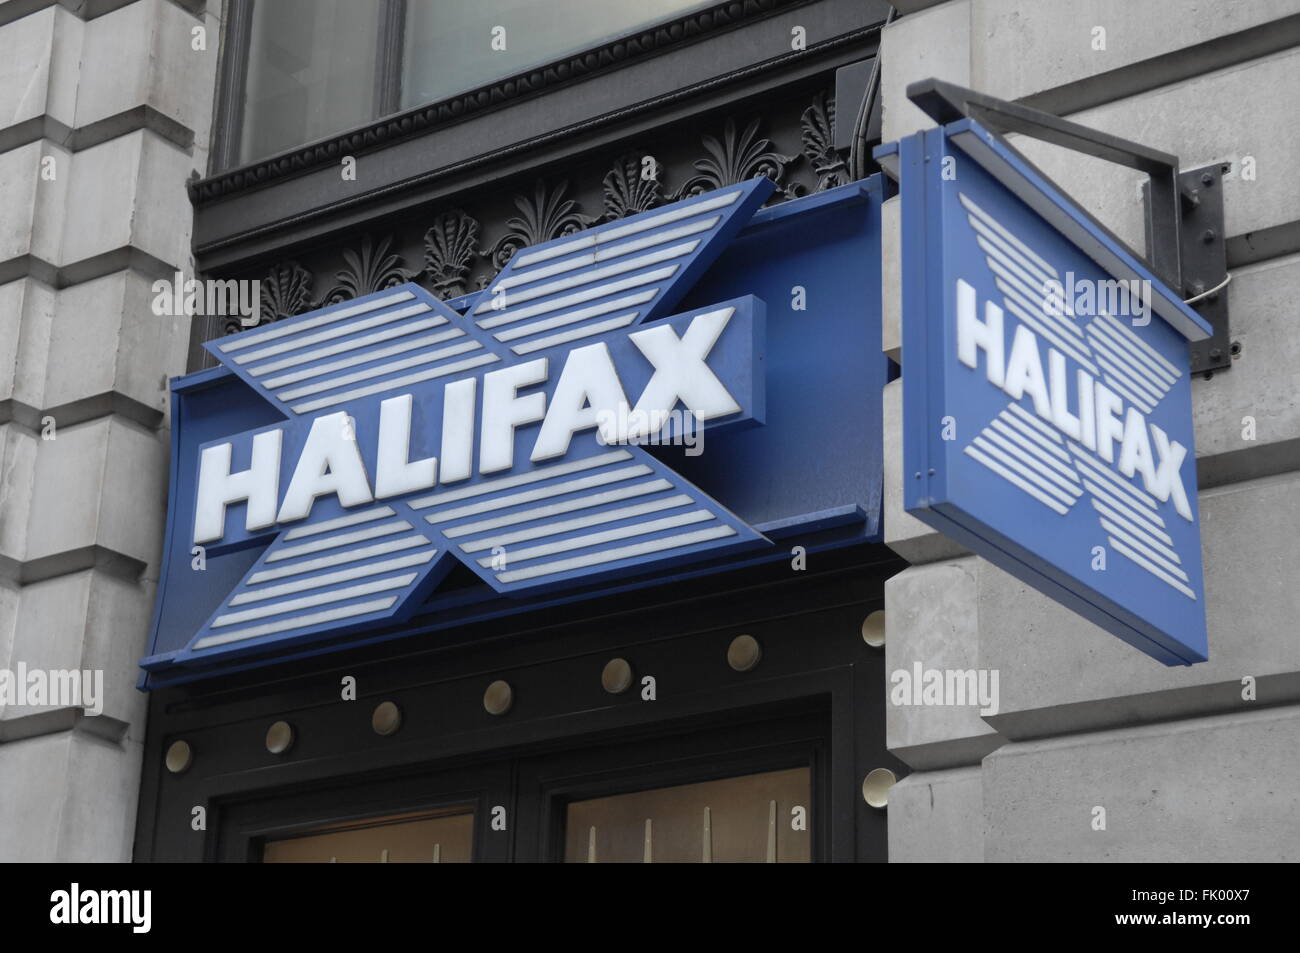 Halifax branch sign in Mayfair,London Stock Photo